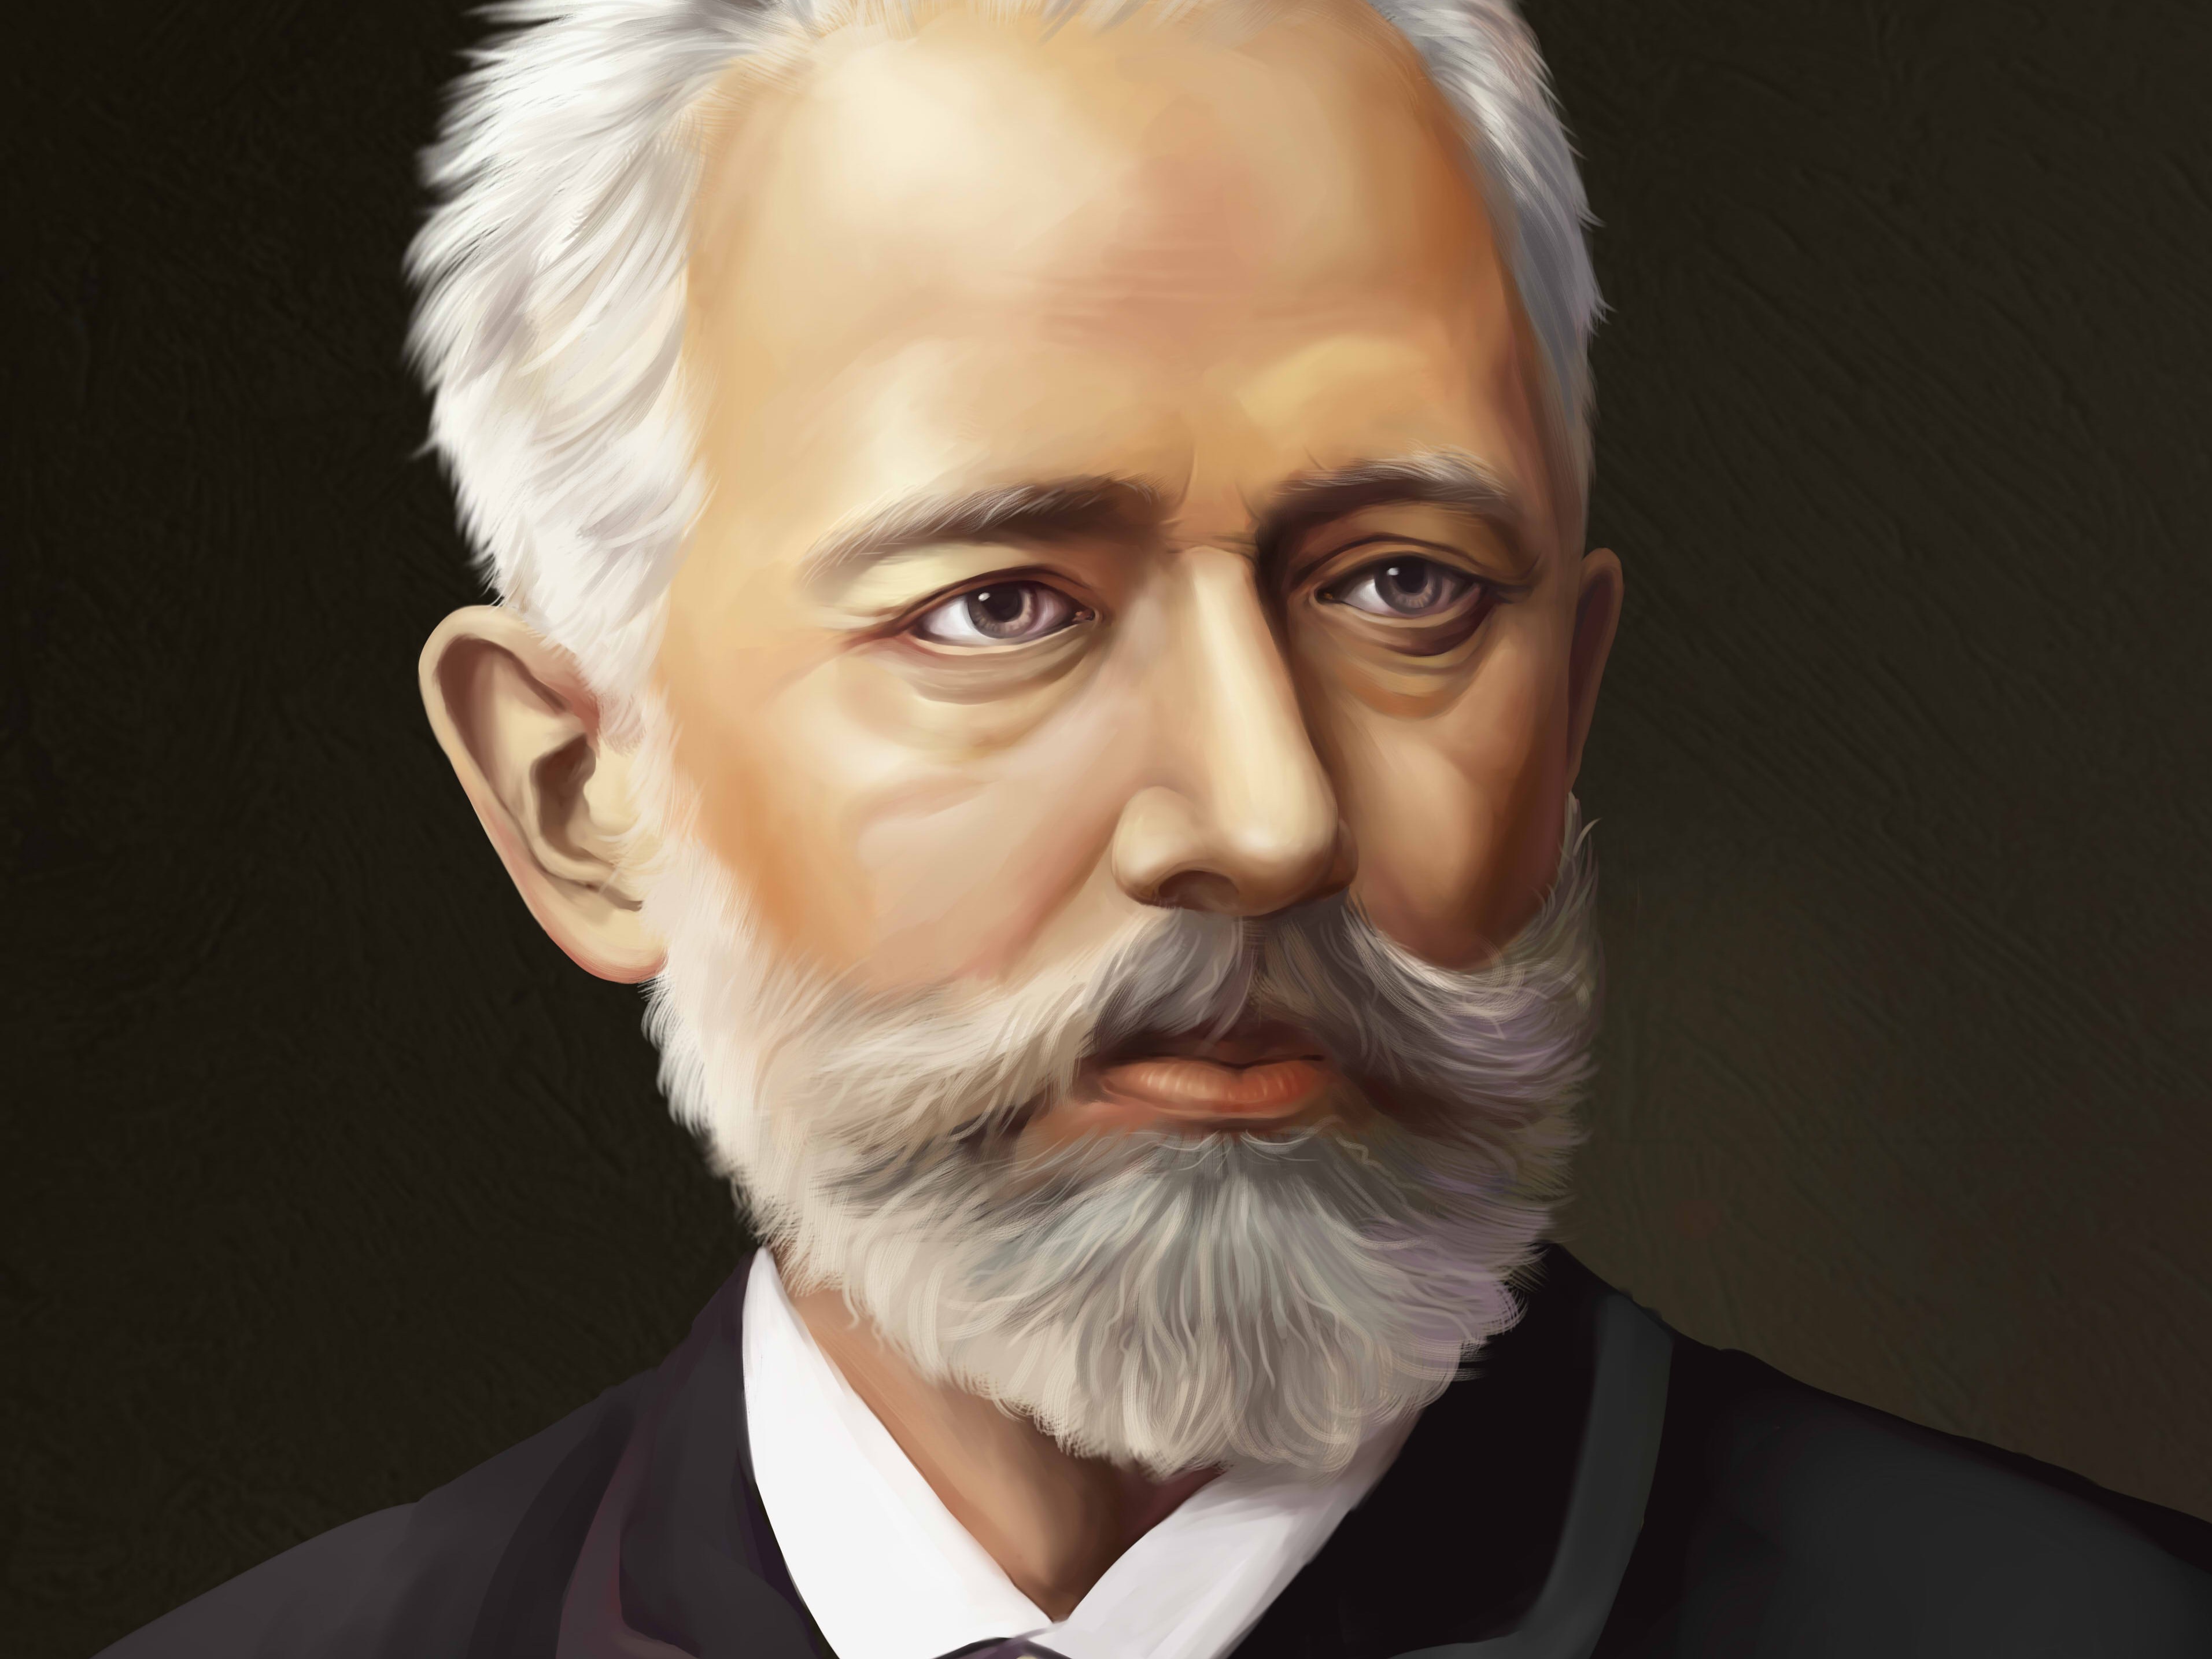 Pyotr Ilyich Tchaikovsky: Profile of the Great Composer